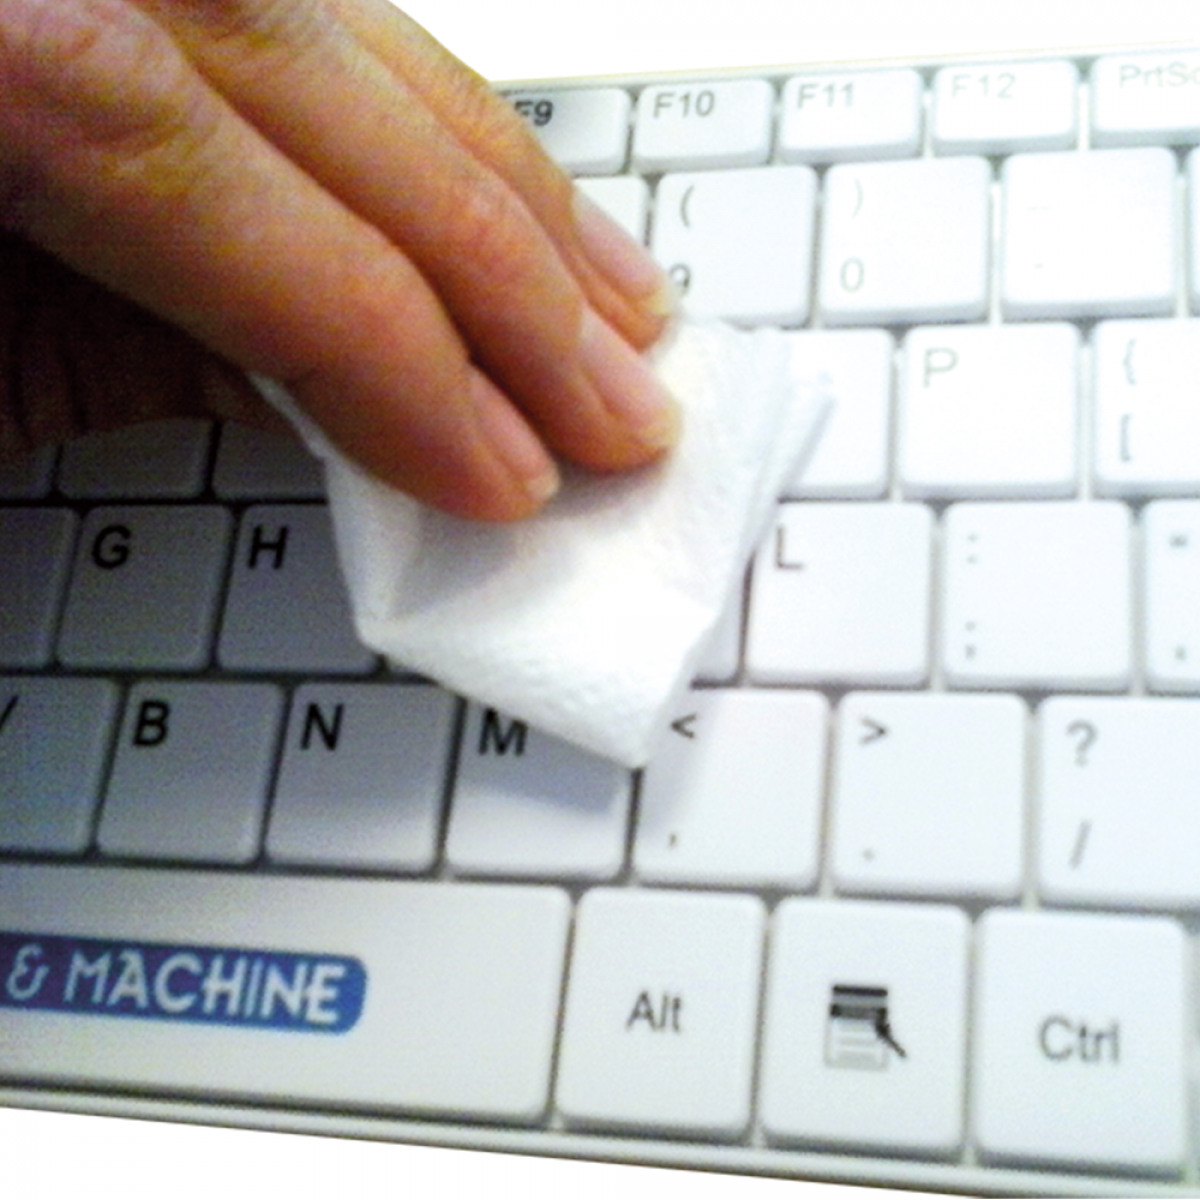 Wipe clean, medical grade keyboard - Man & Machine Its Cool Keyboard